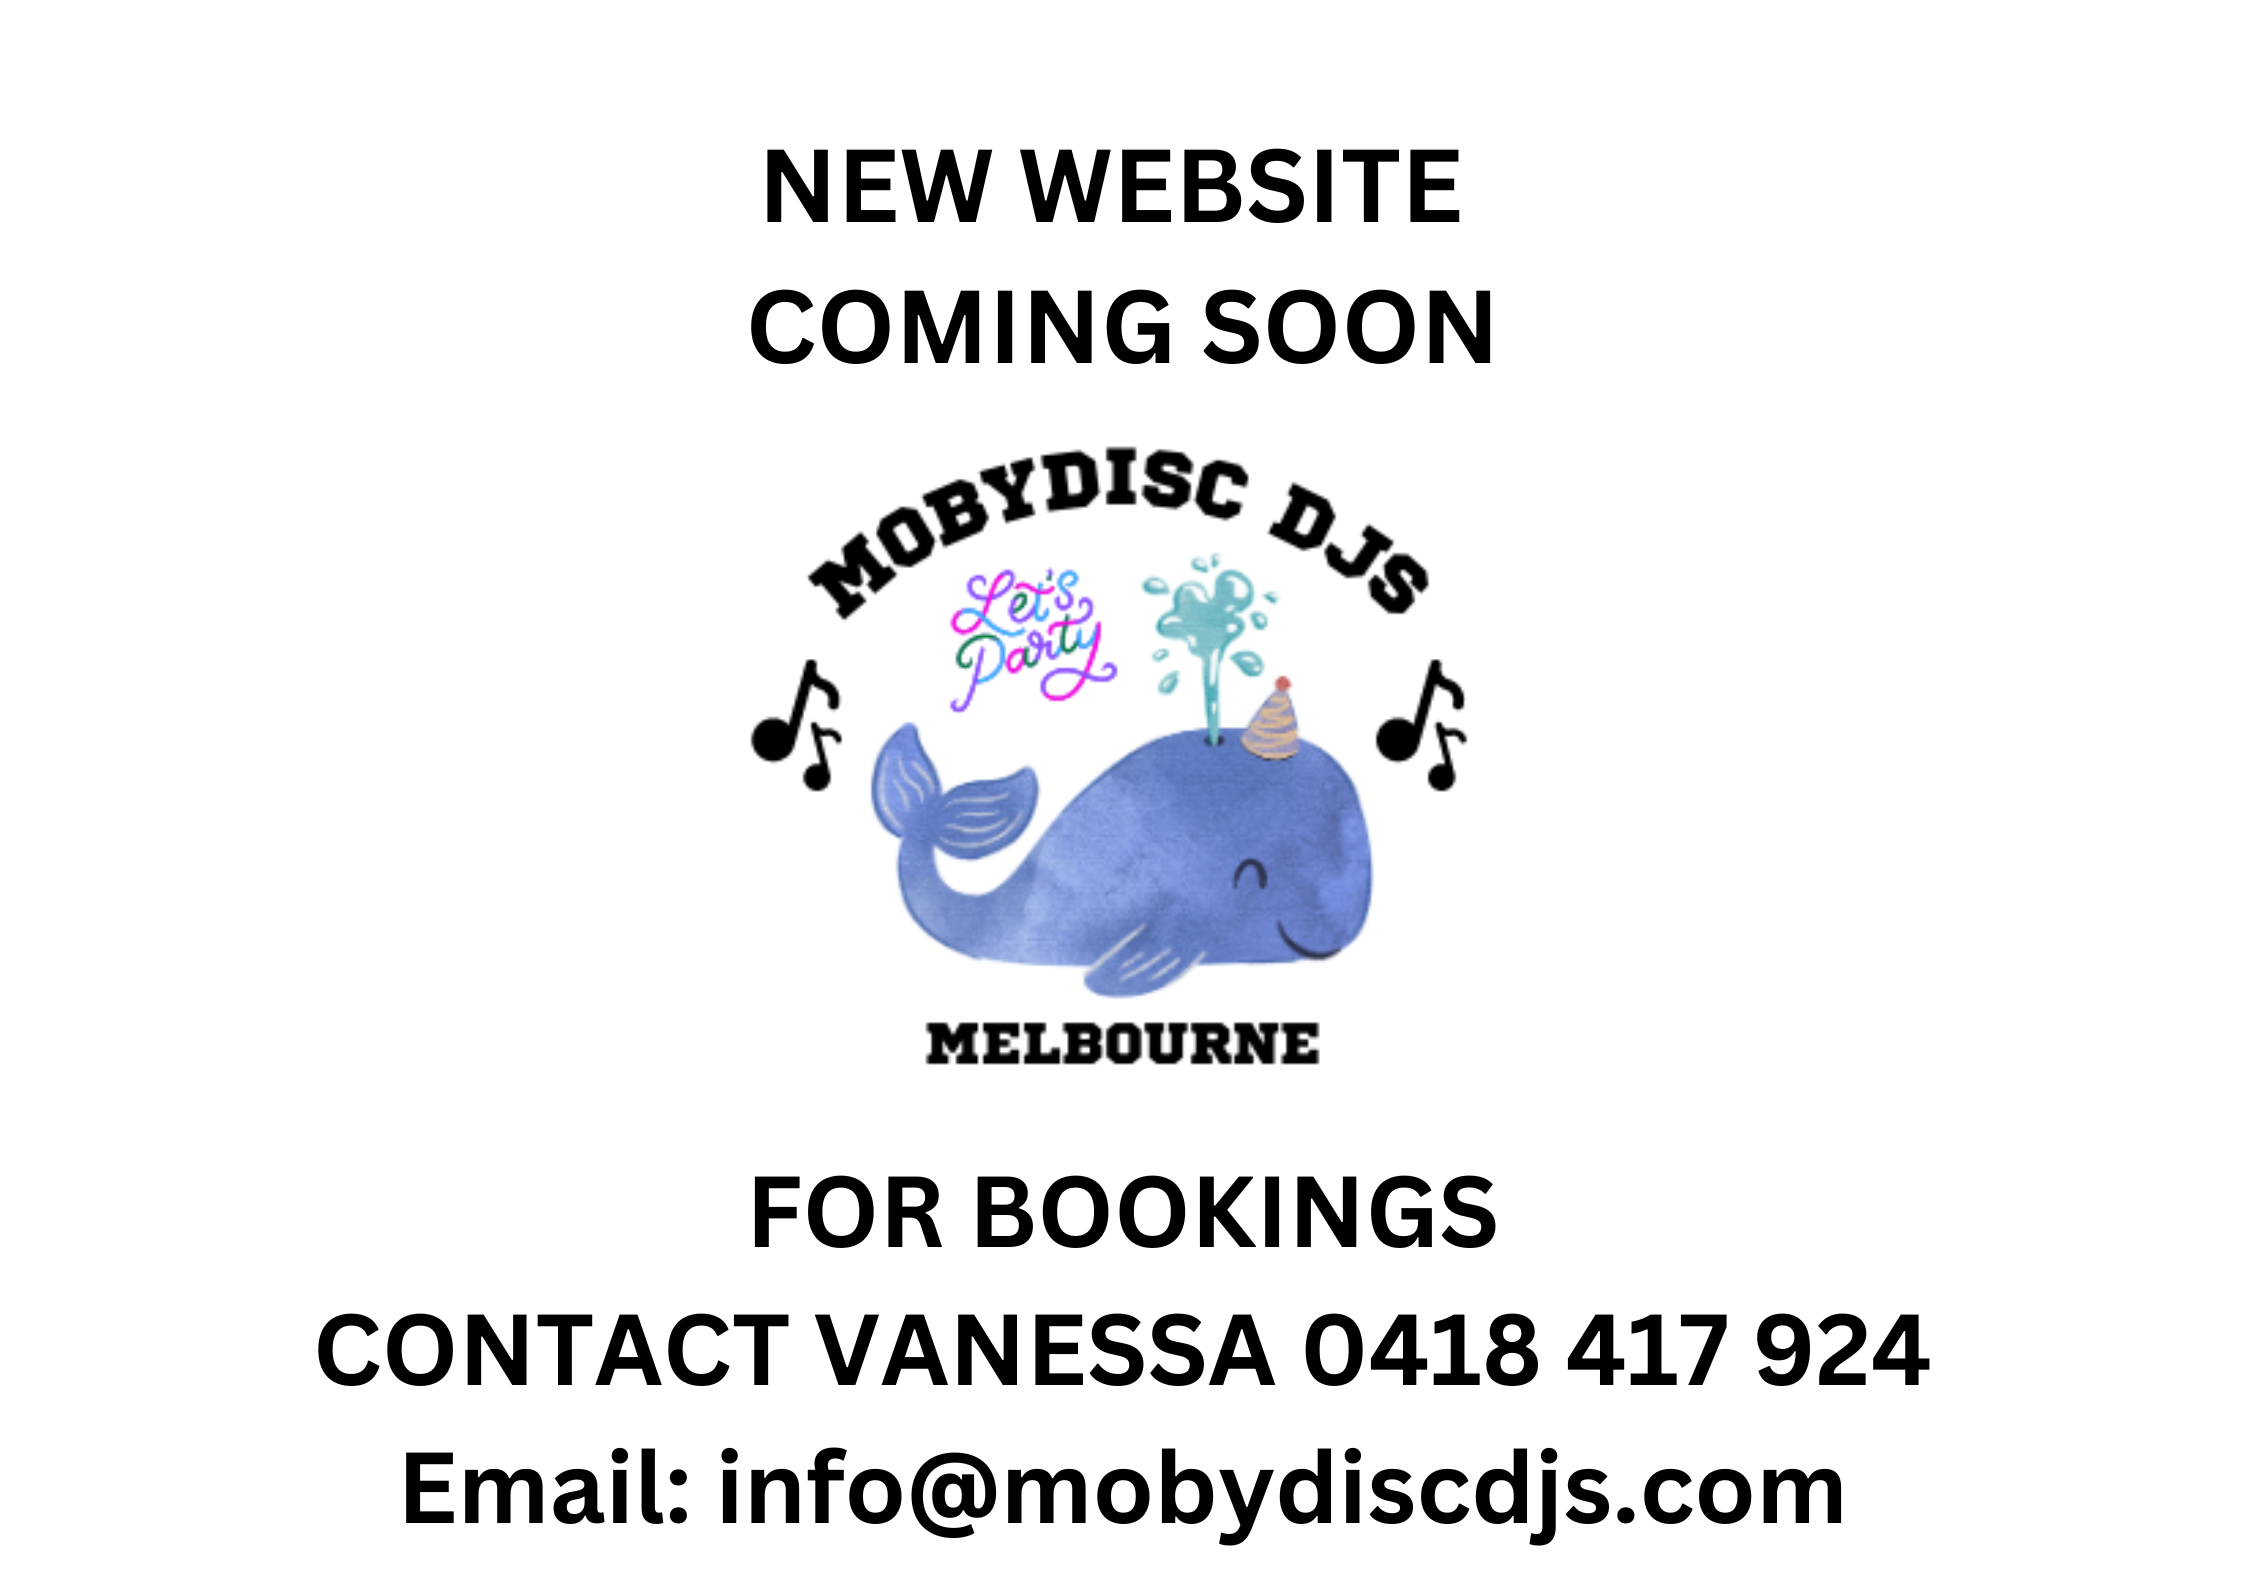 Mobydisc Djs Contact Details